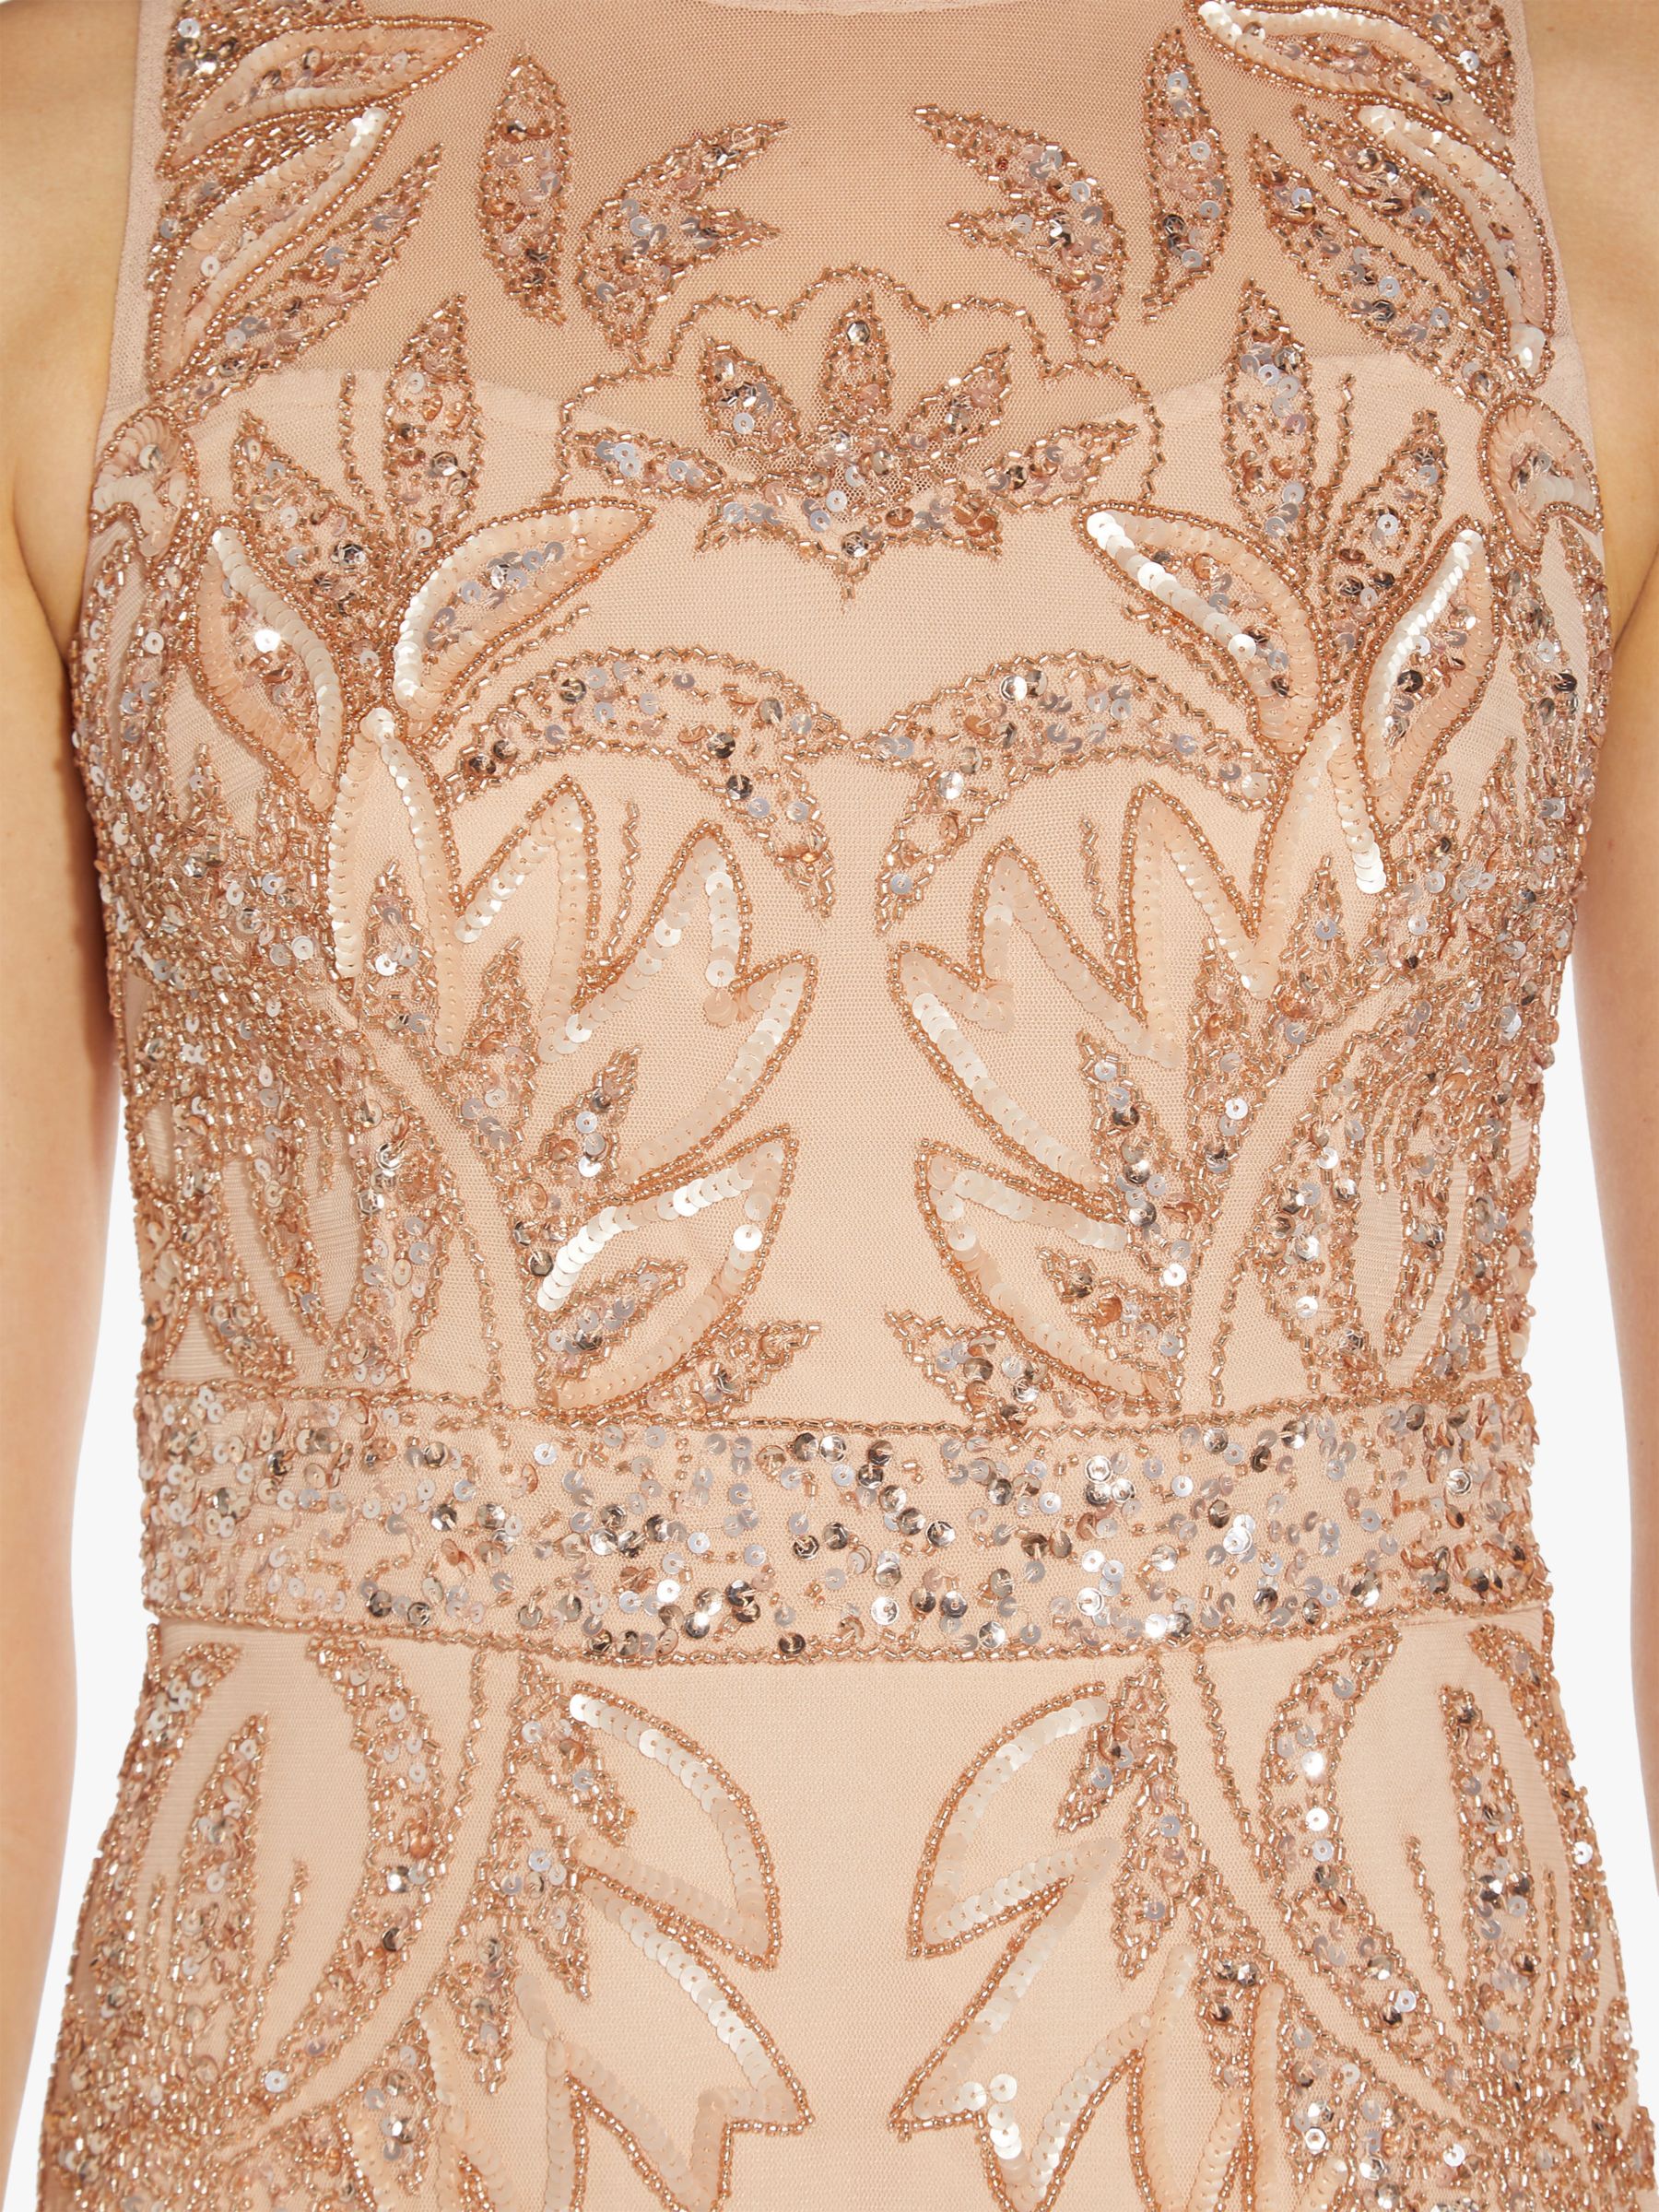 Adrianna Papell Papell Studio Beaded Column Dress, Rose Gold, 6